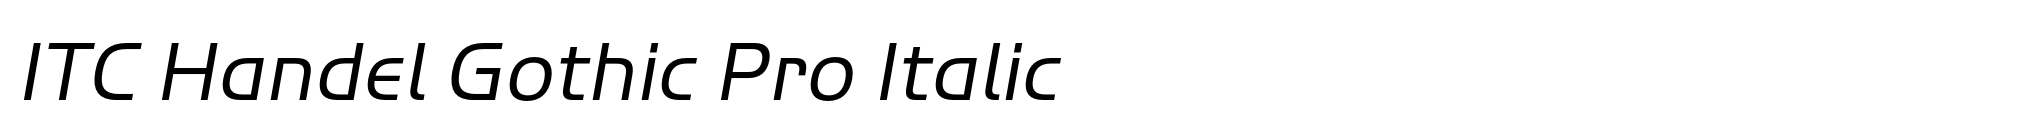 ITC Handel Gothic Pro Italic image